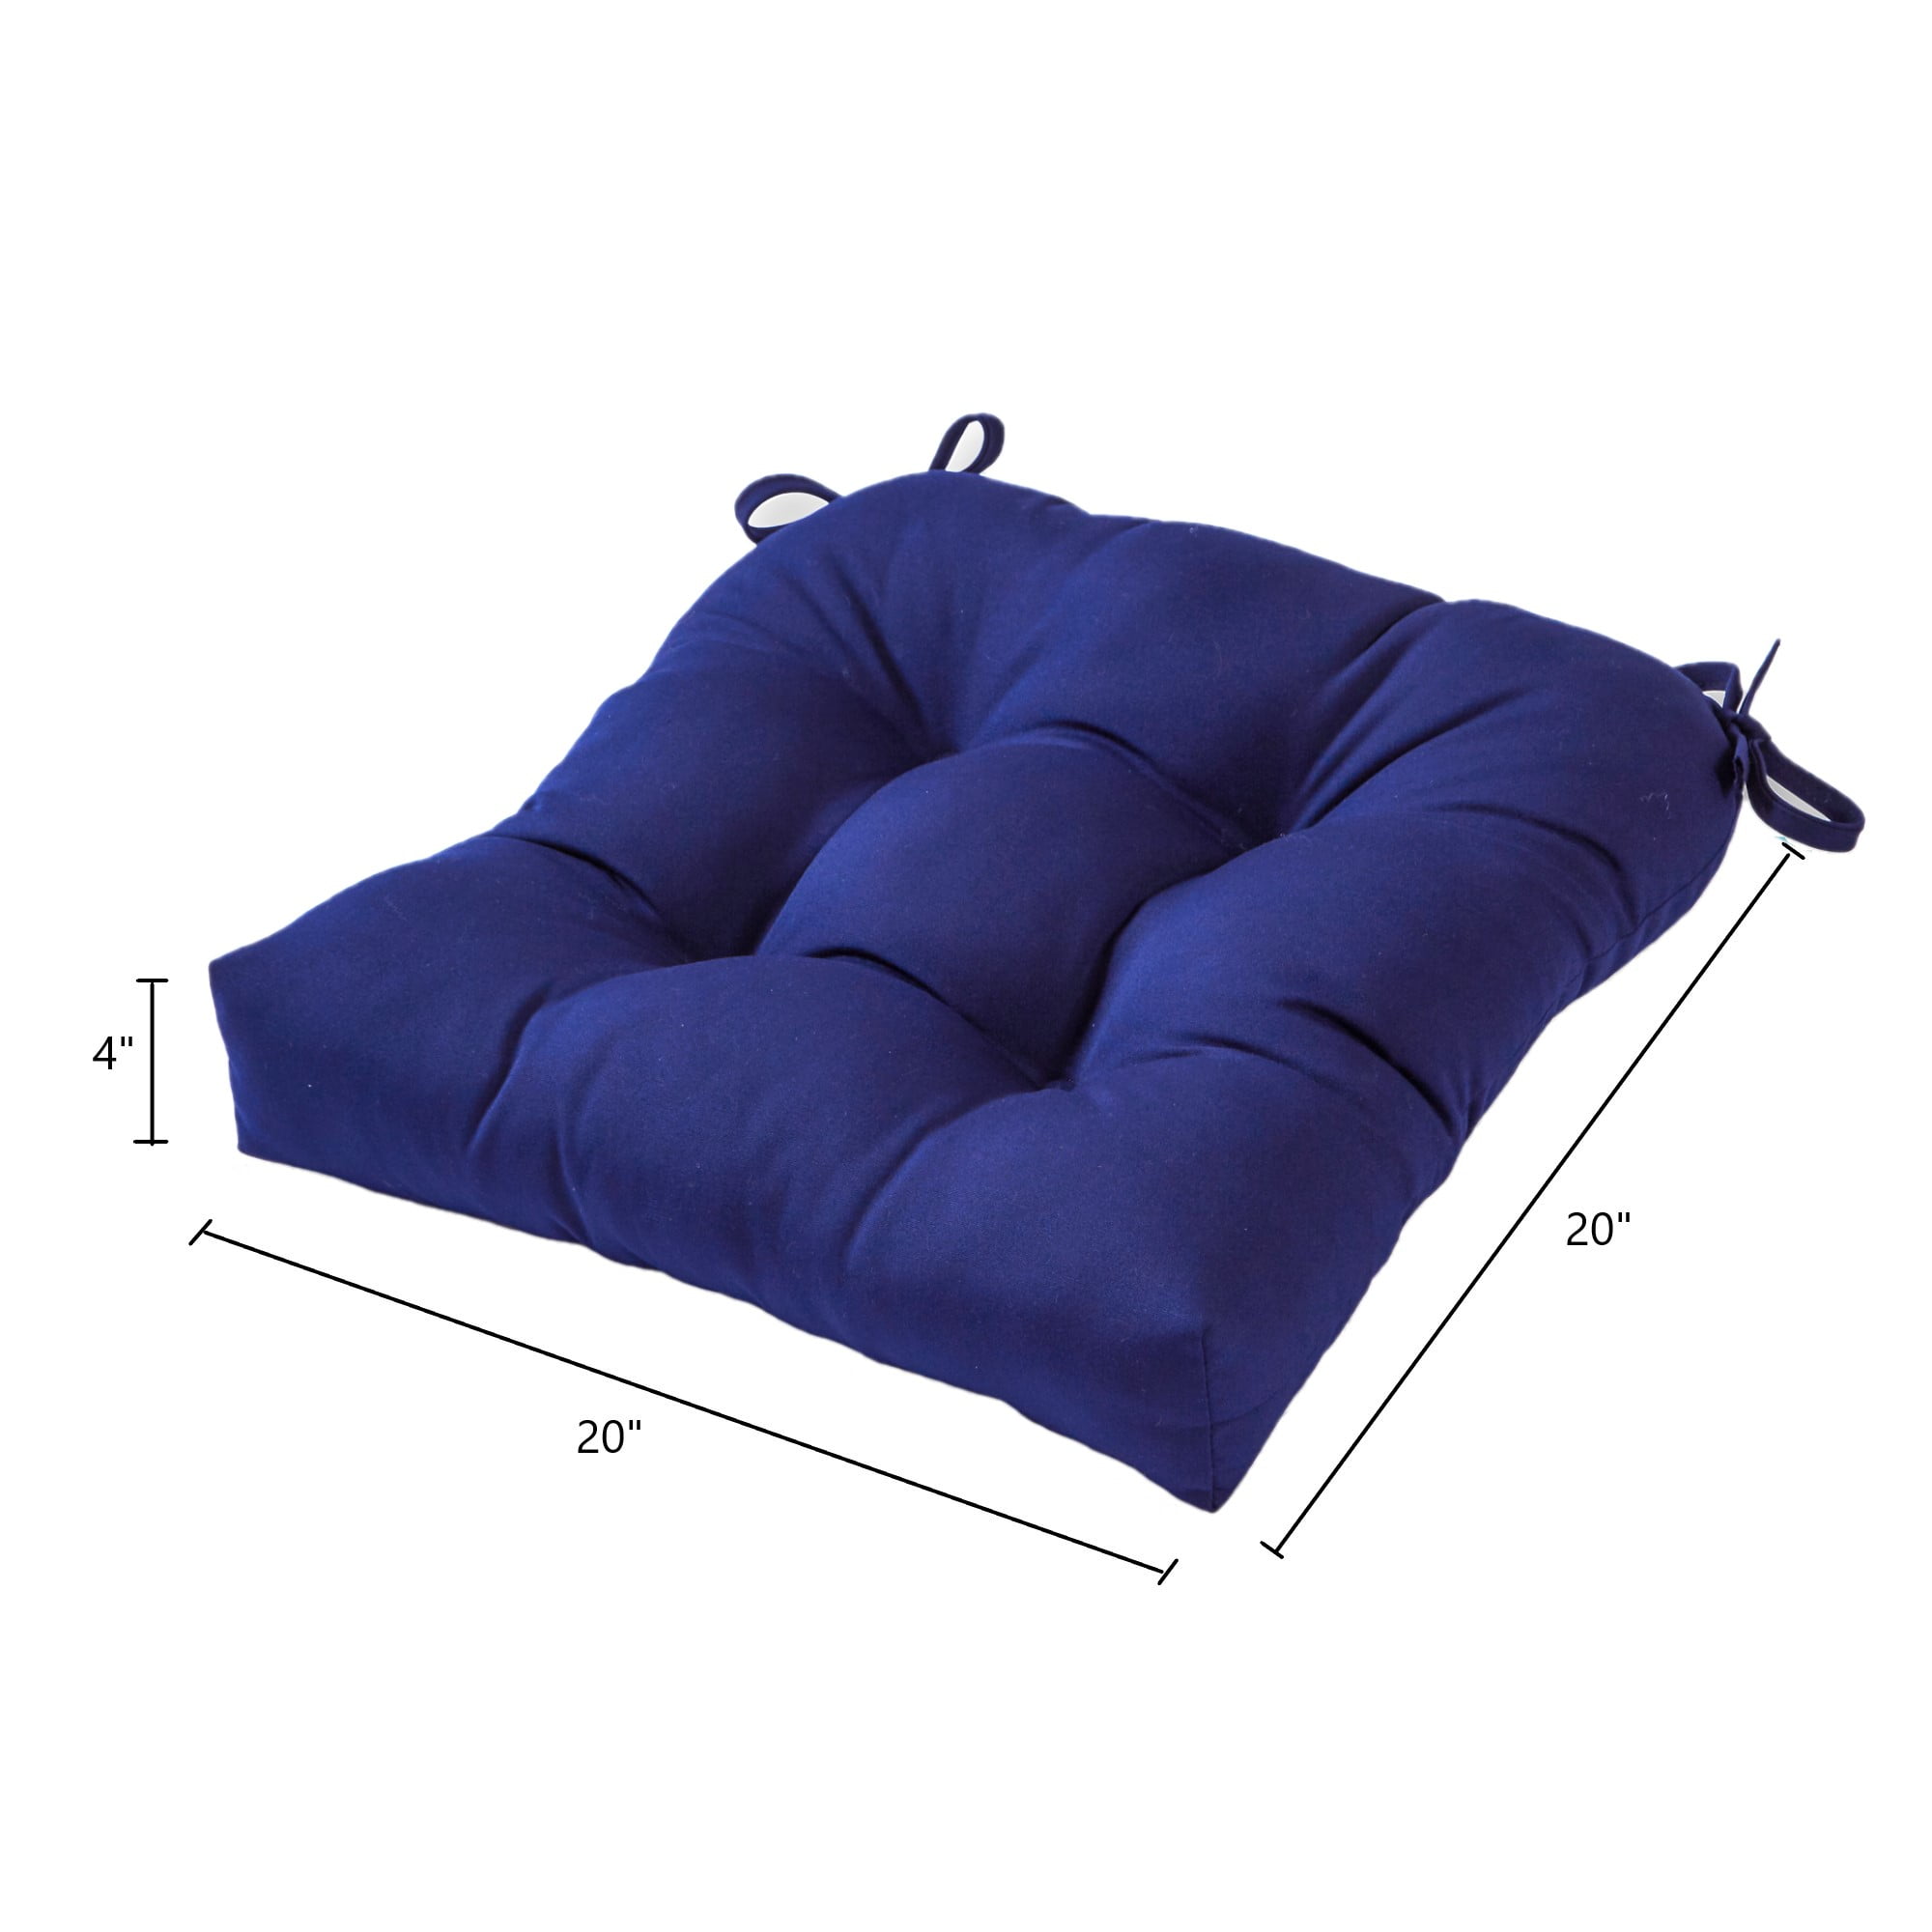 Lovesac - Sactionals Seat Cushion Insert: Lovesoft